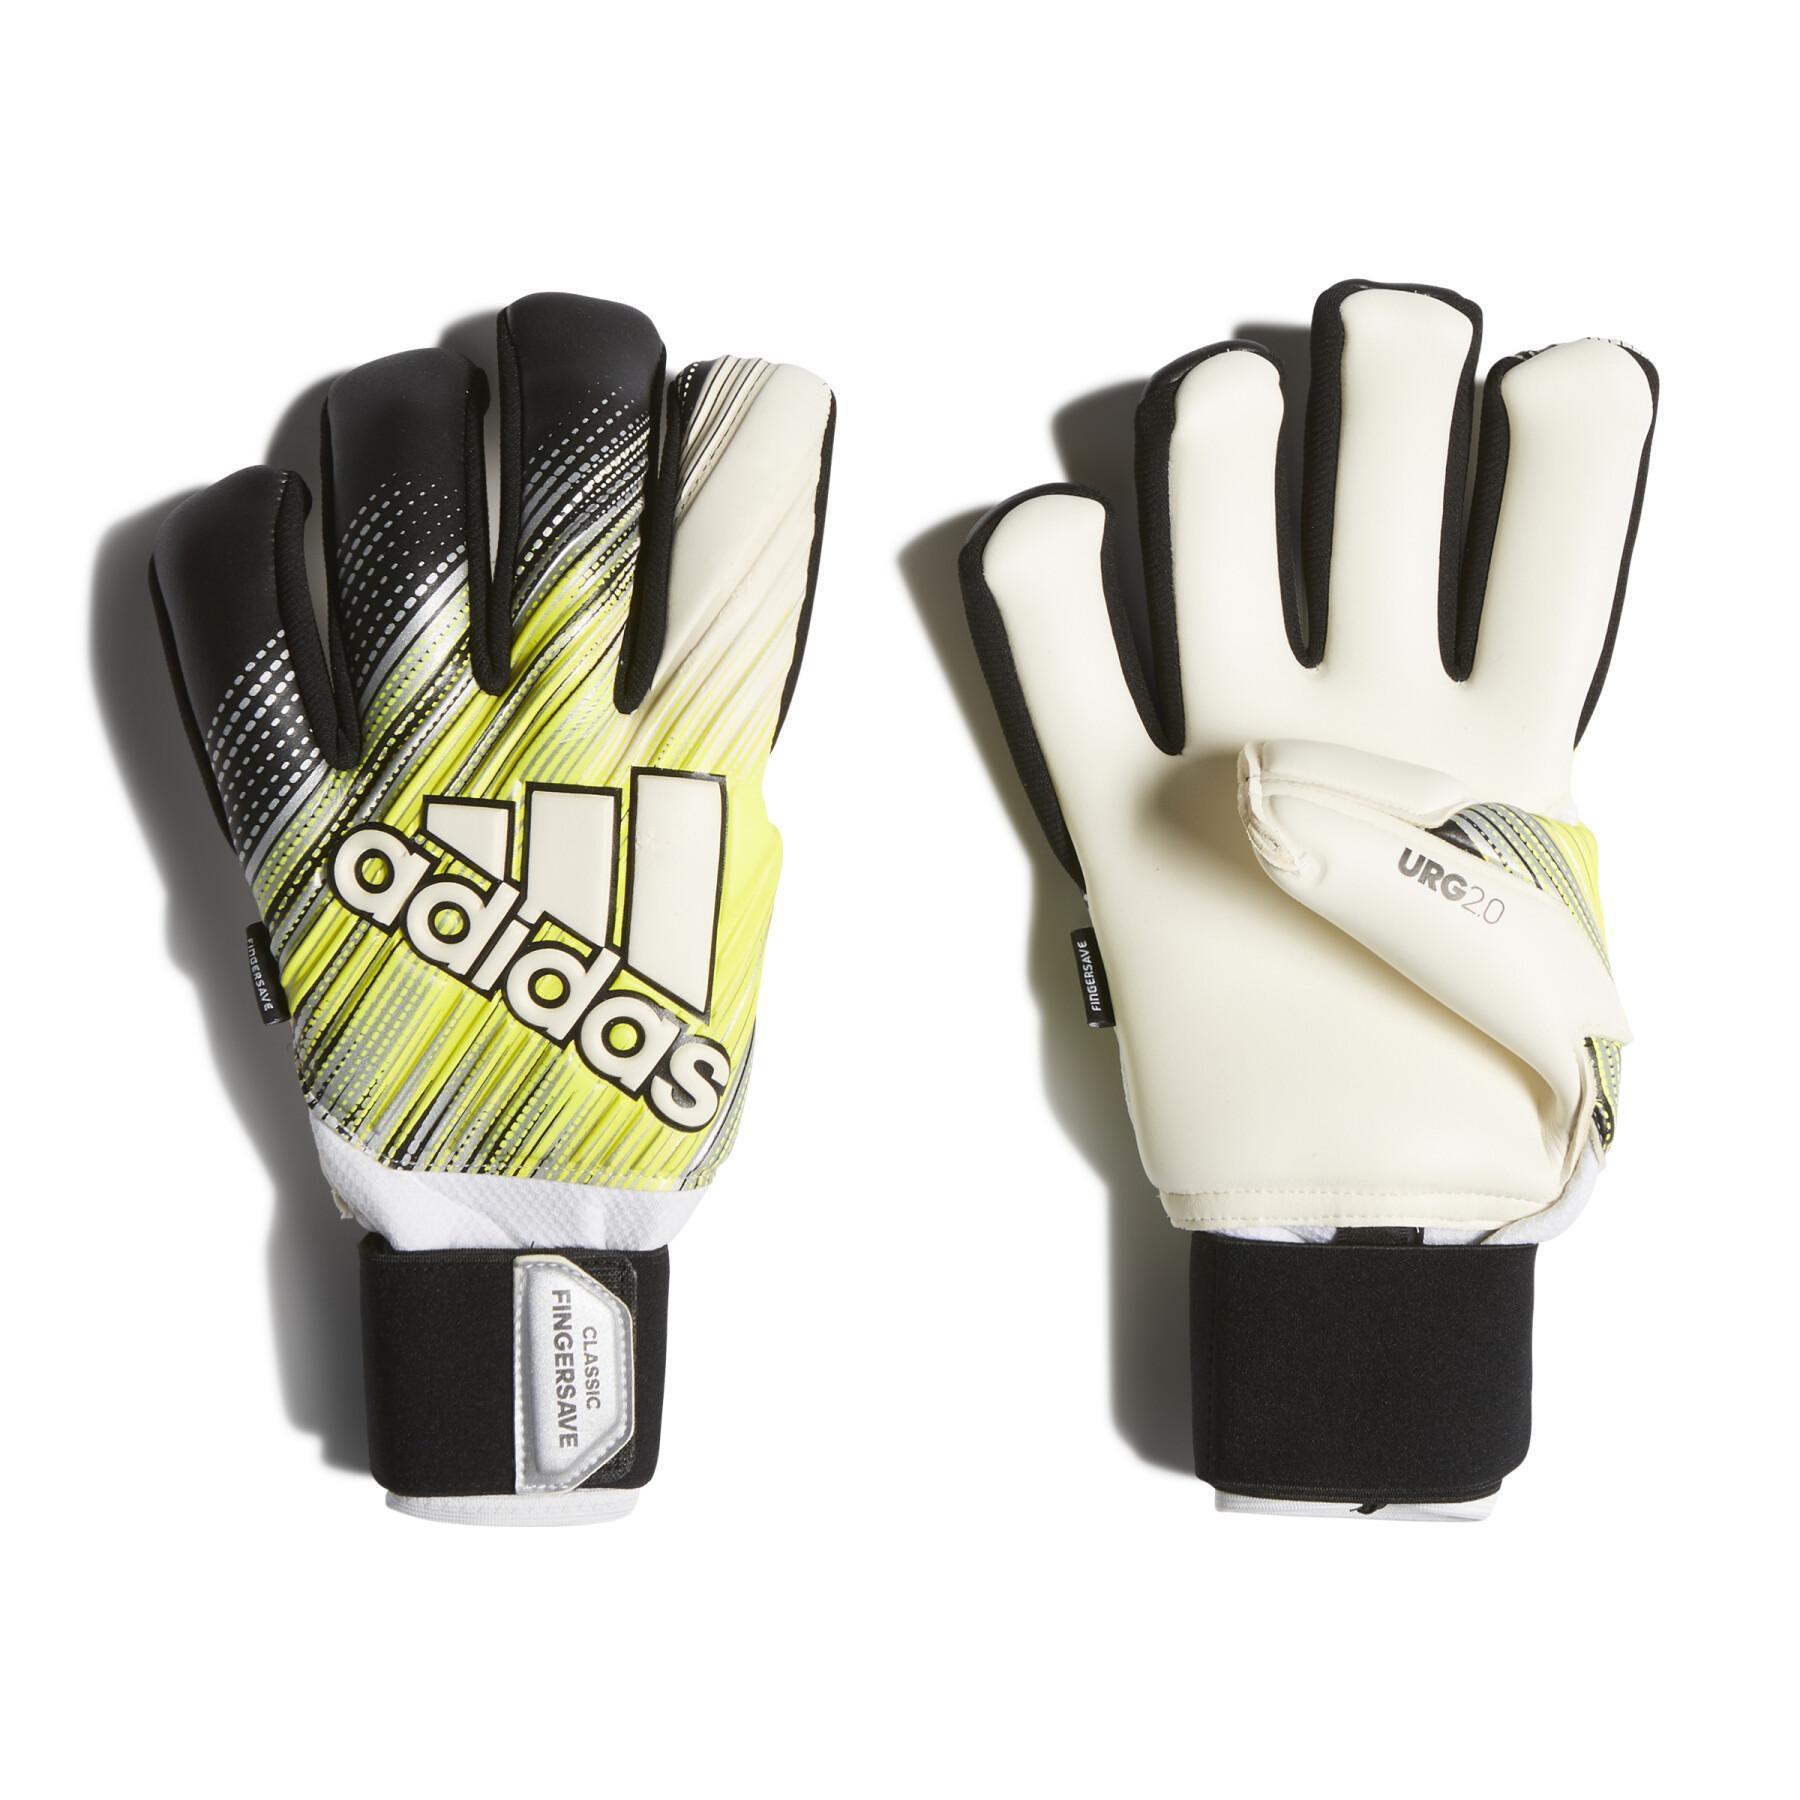 Goalkeeper gloves adidas Classic Pro Fingersave